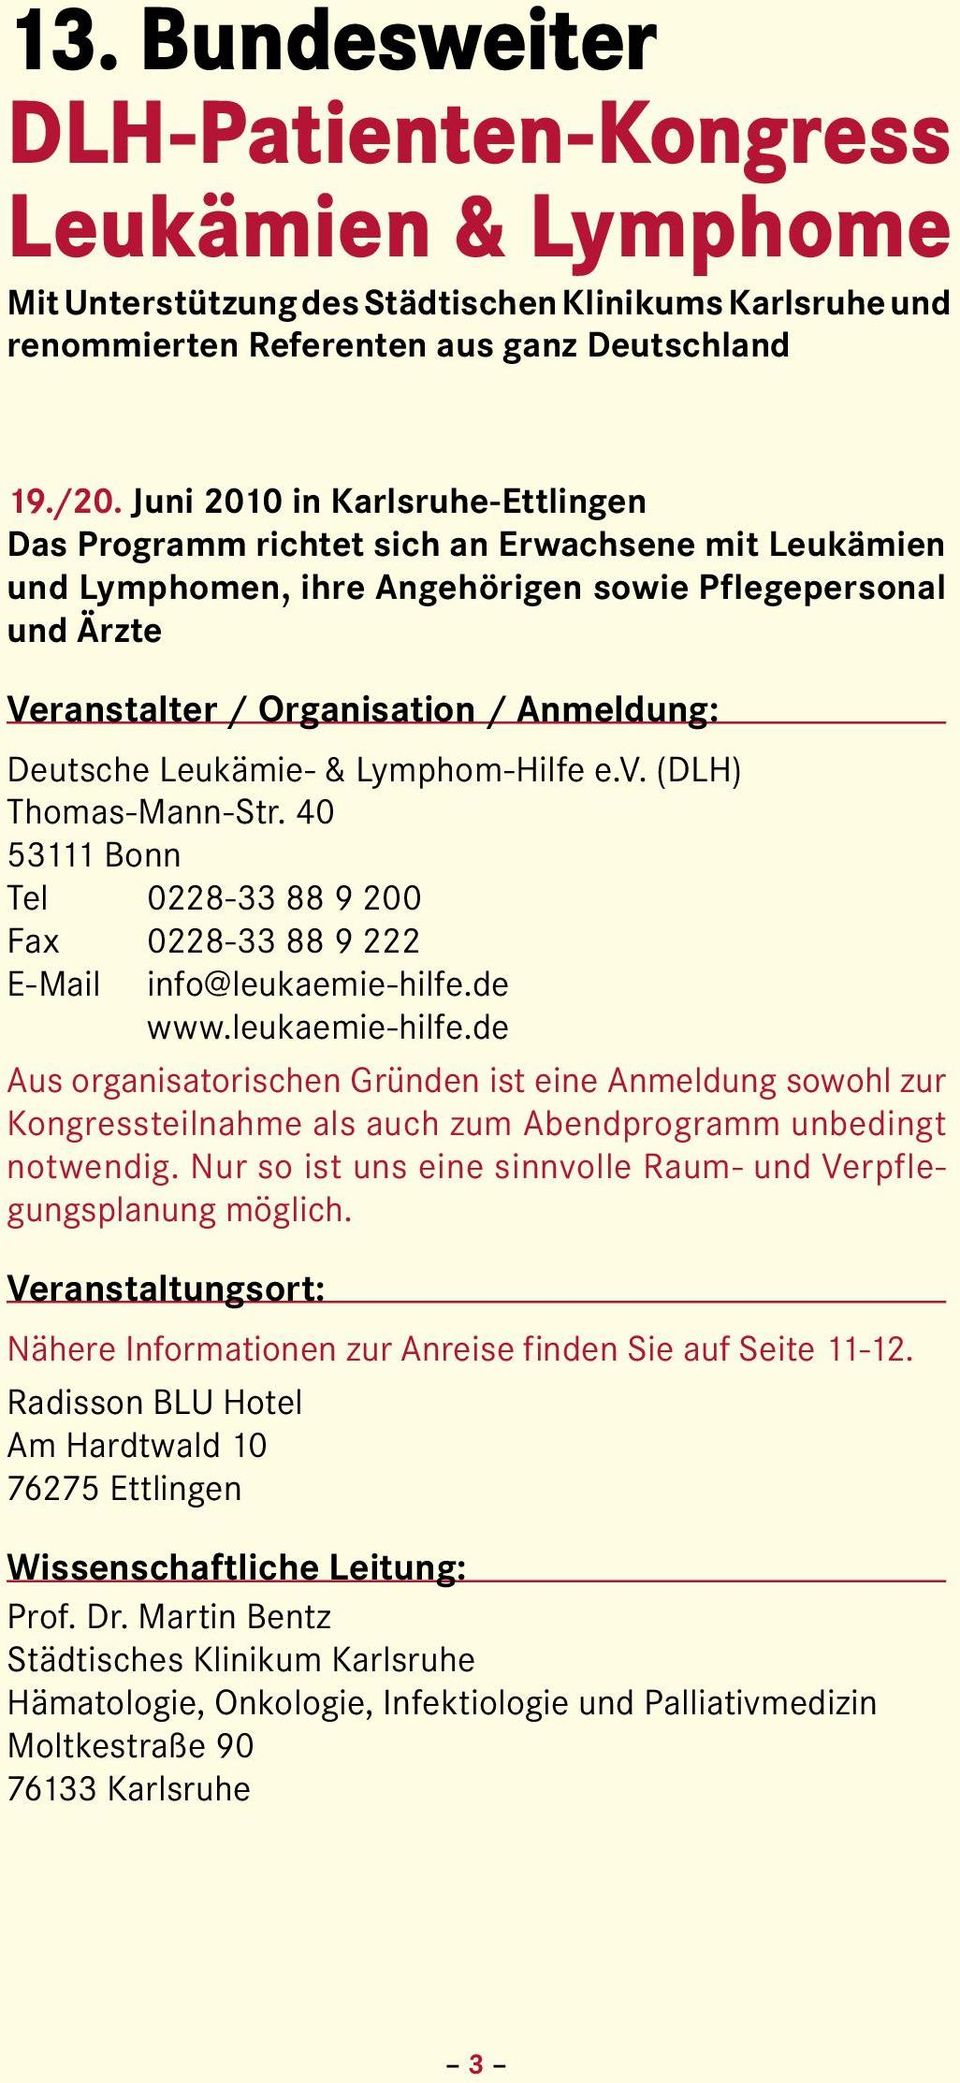 Leukämie- & Lymphom-Hilfe e.v. (DLH) Thomas-Mann-Str. 40 53111 Bonn Tel 0228-33 88 9 200 Fax 0228-33 88 9 222 E-Mail info@leukaemie-hilfe.